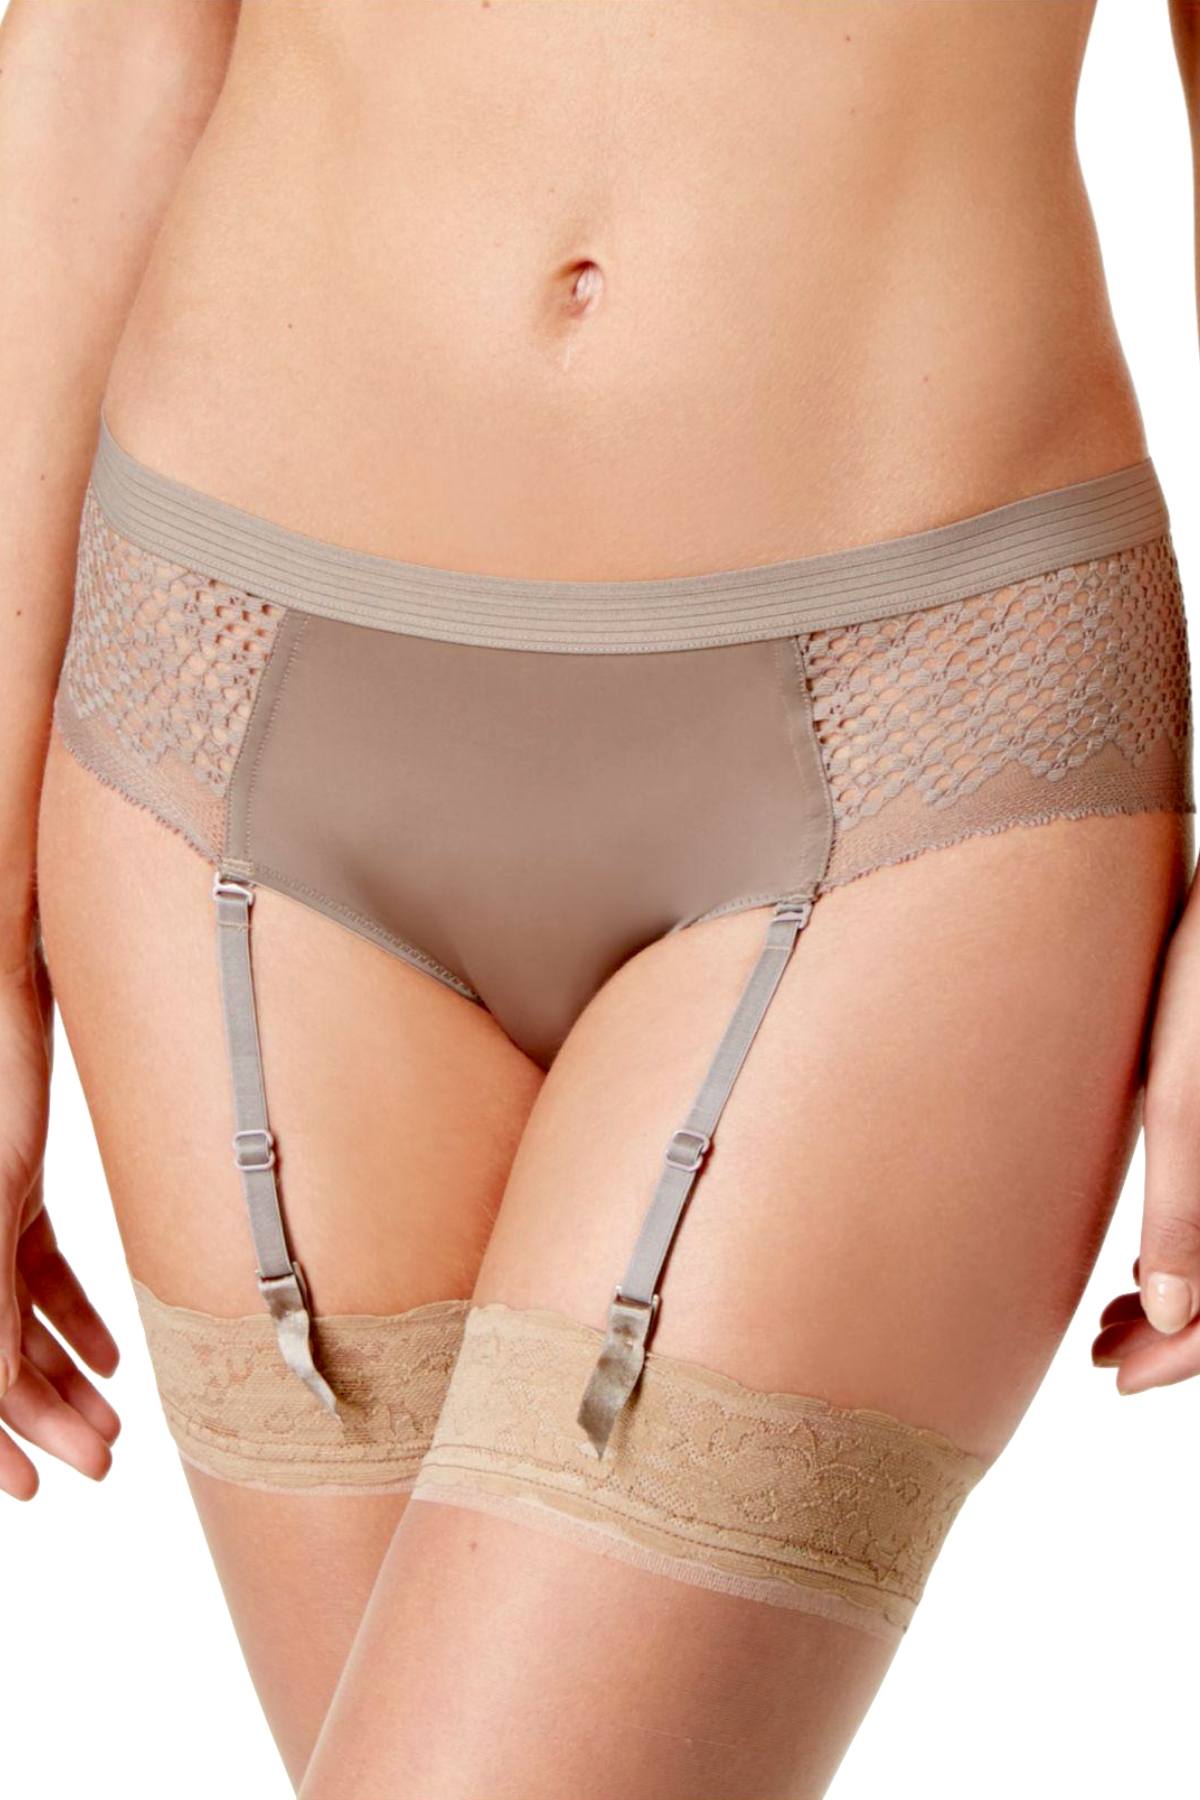 DKNY Sandlewood-Nude Sheer-Lace Garter Panty